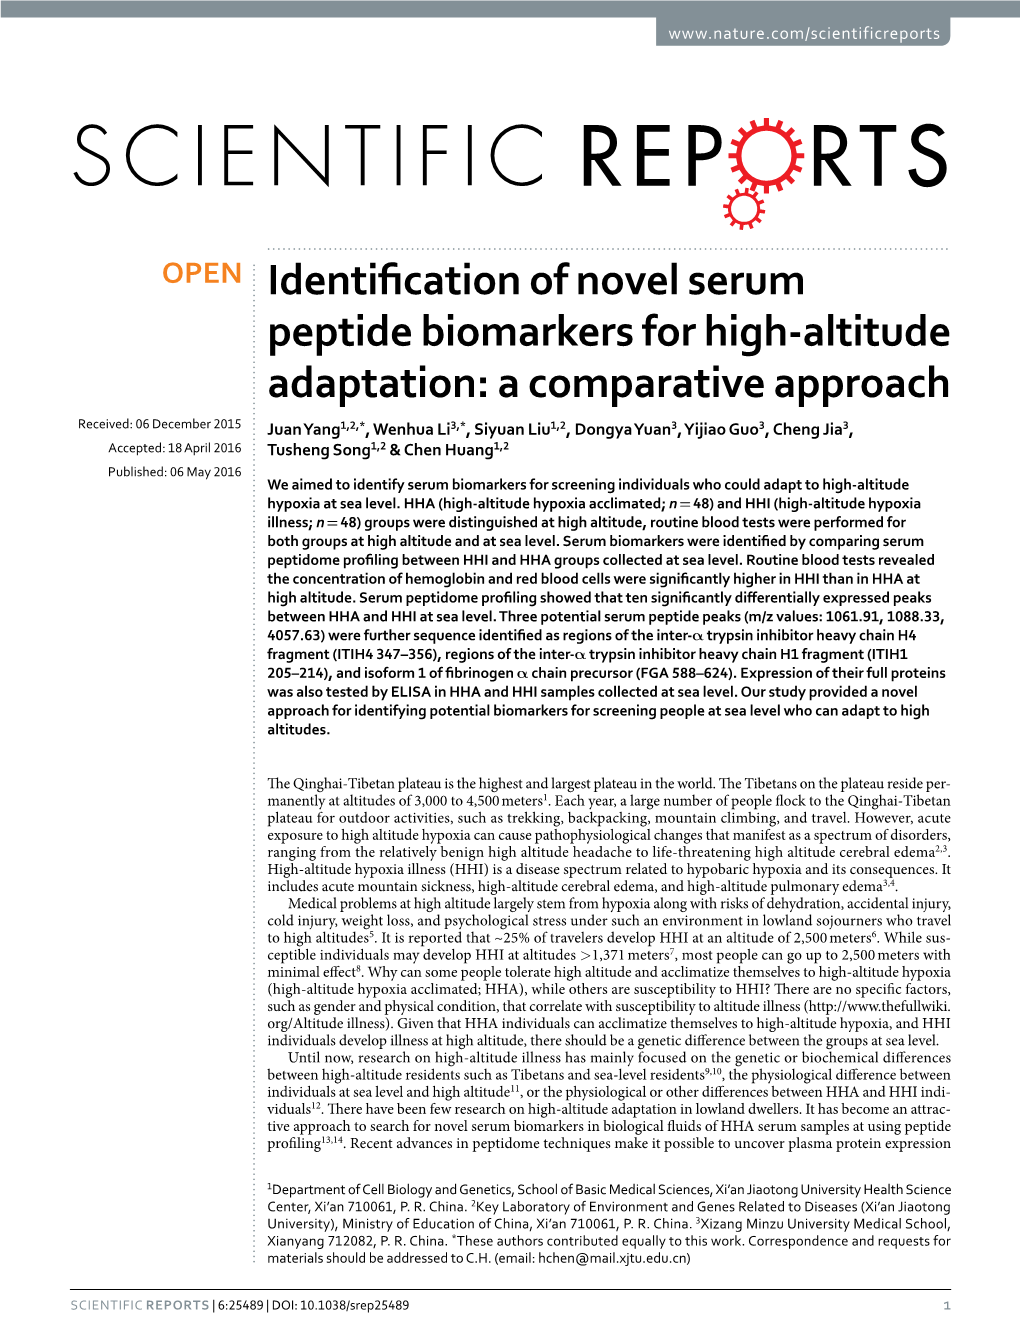 Identification of Novel Serum Peptide Biomarkers for High